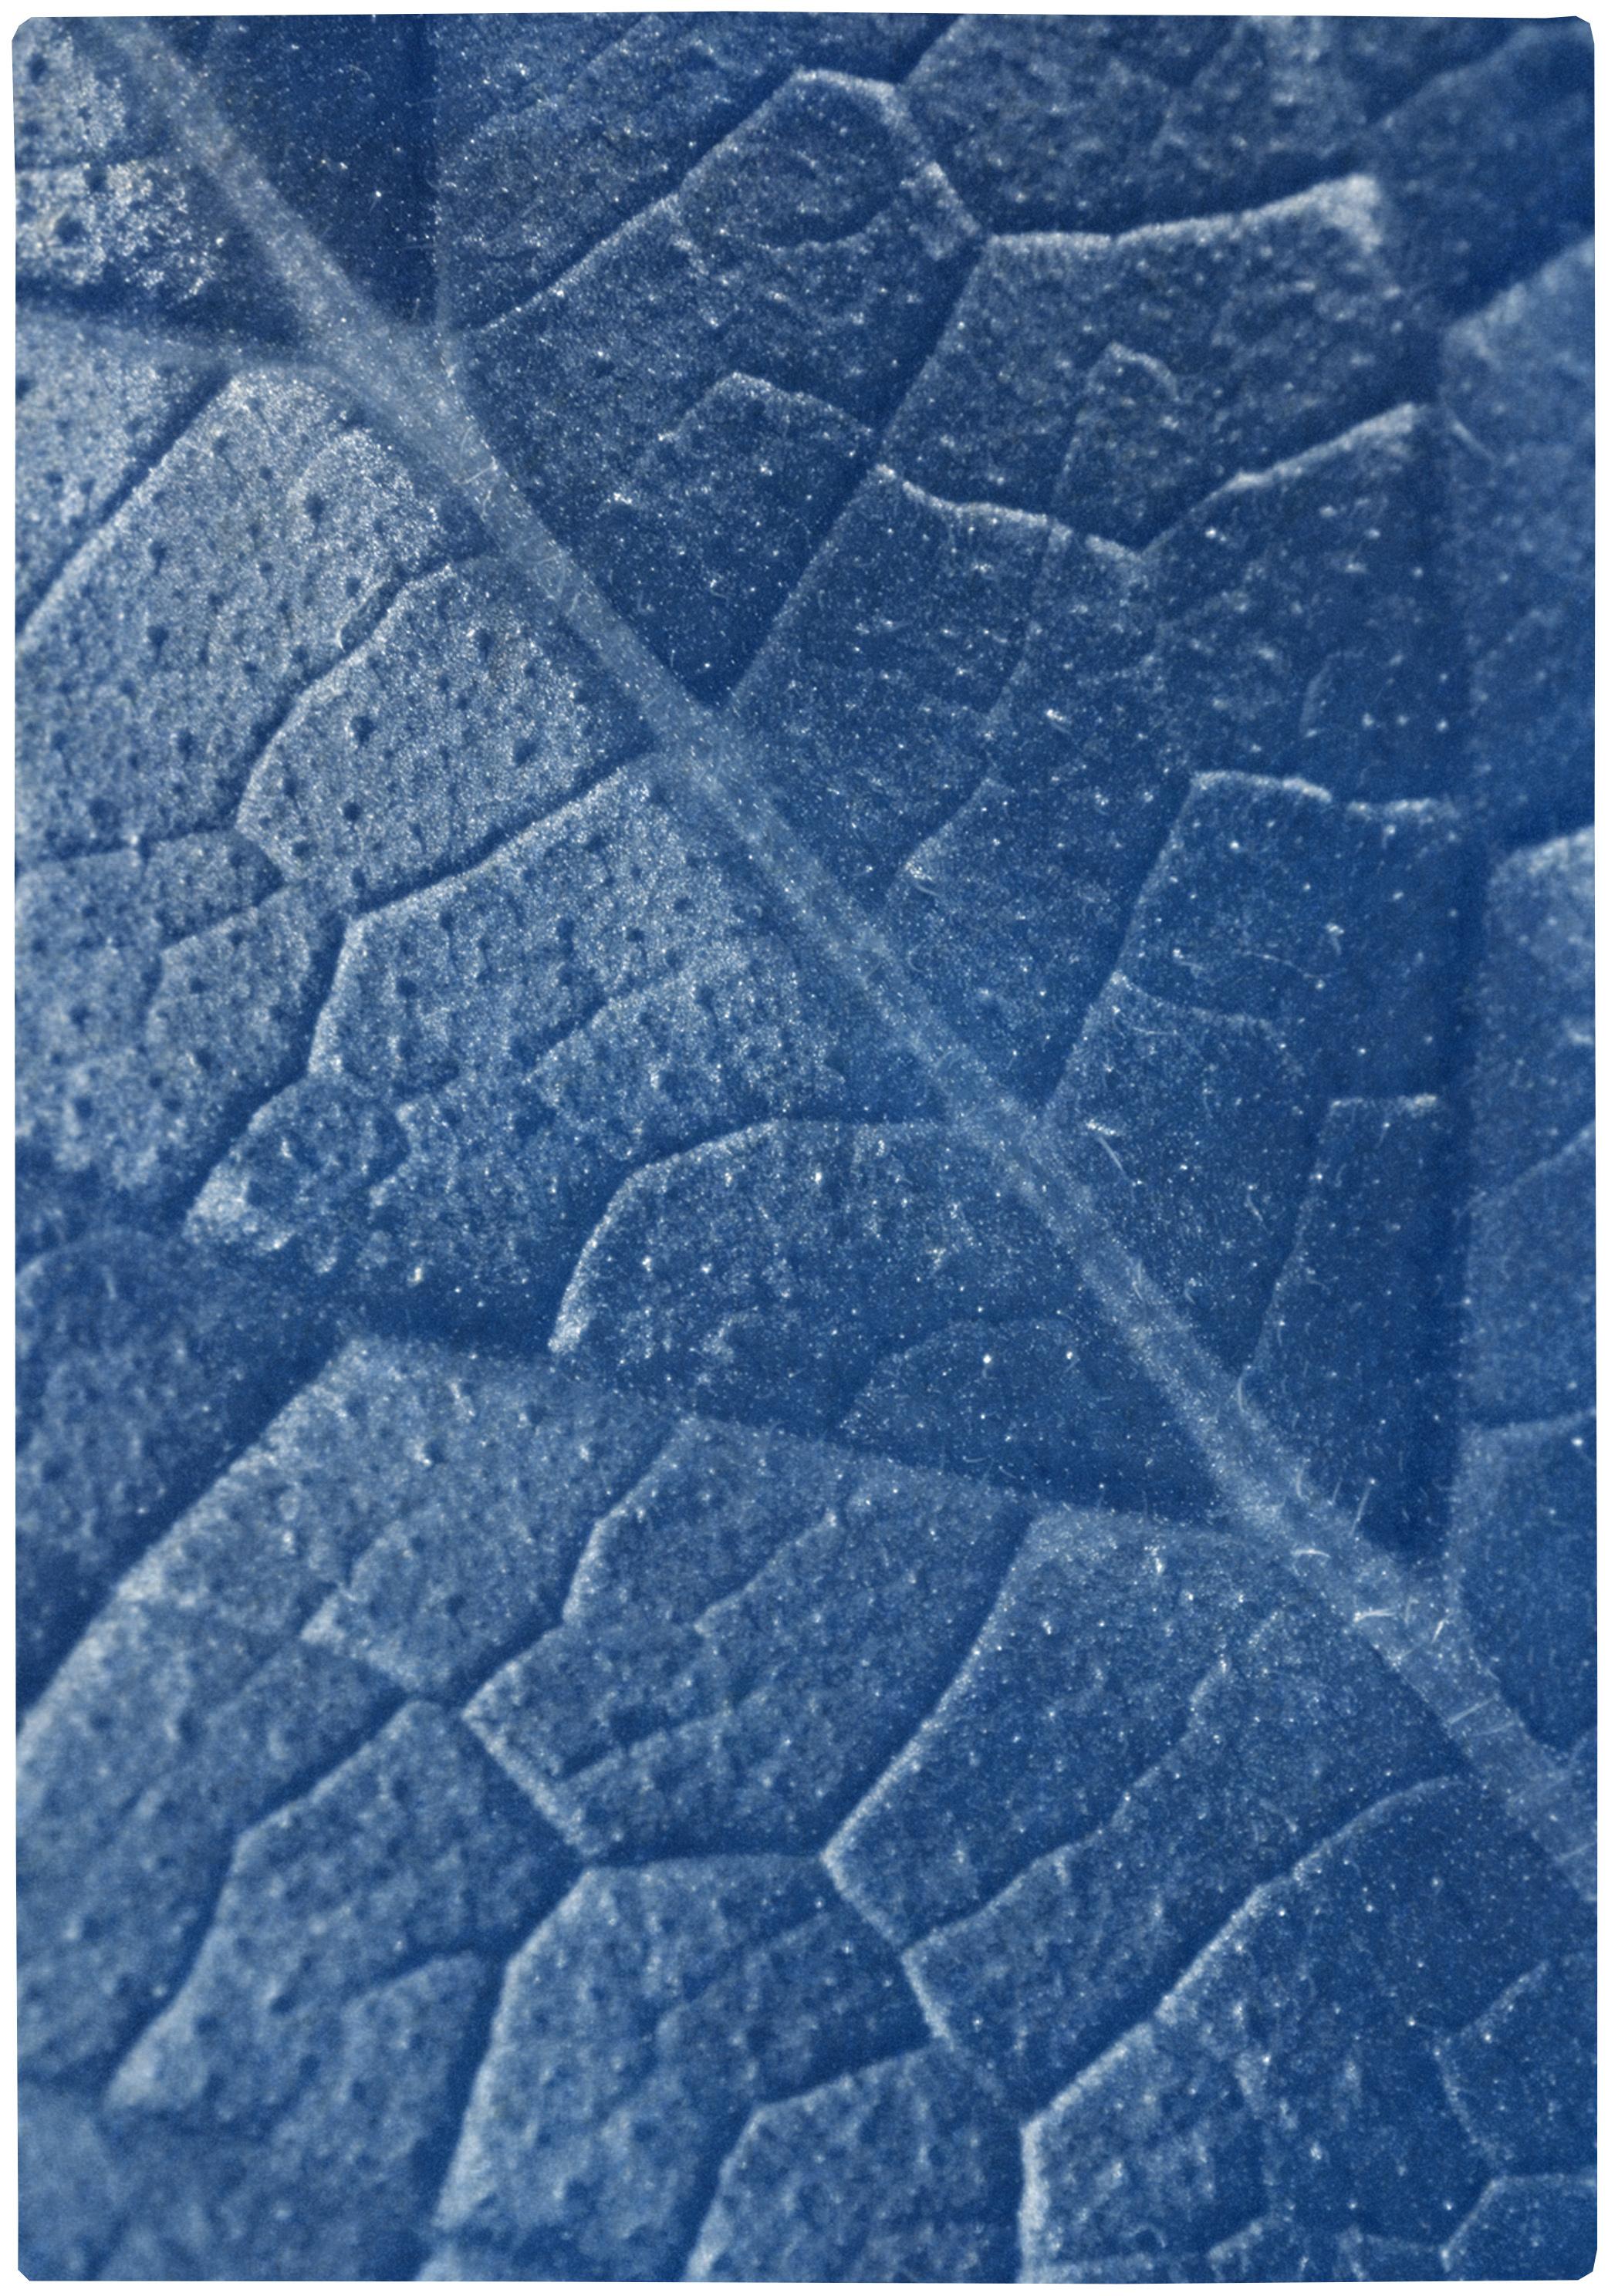 Macro Leaf Triptych in Blue Tones, Cyanotype Print Multi Panels, Botanical Art - Realist Painting by Kind of Cyan